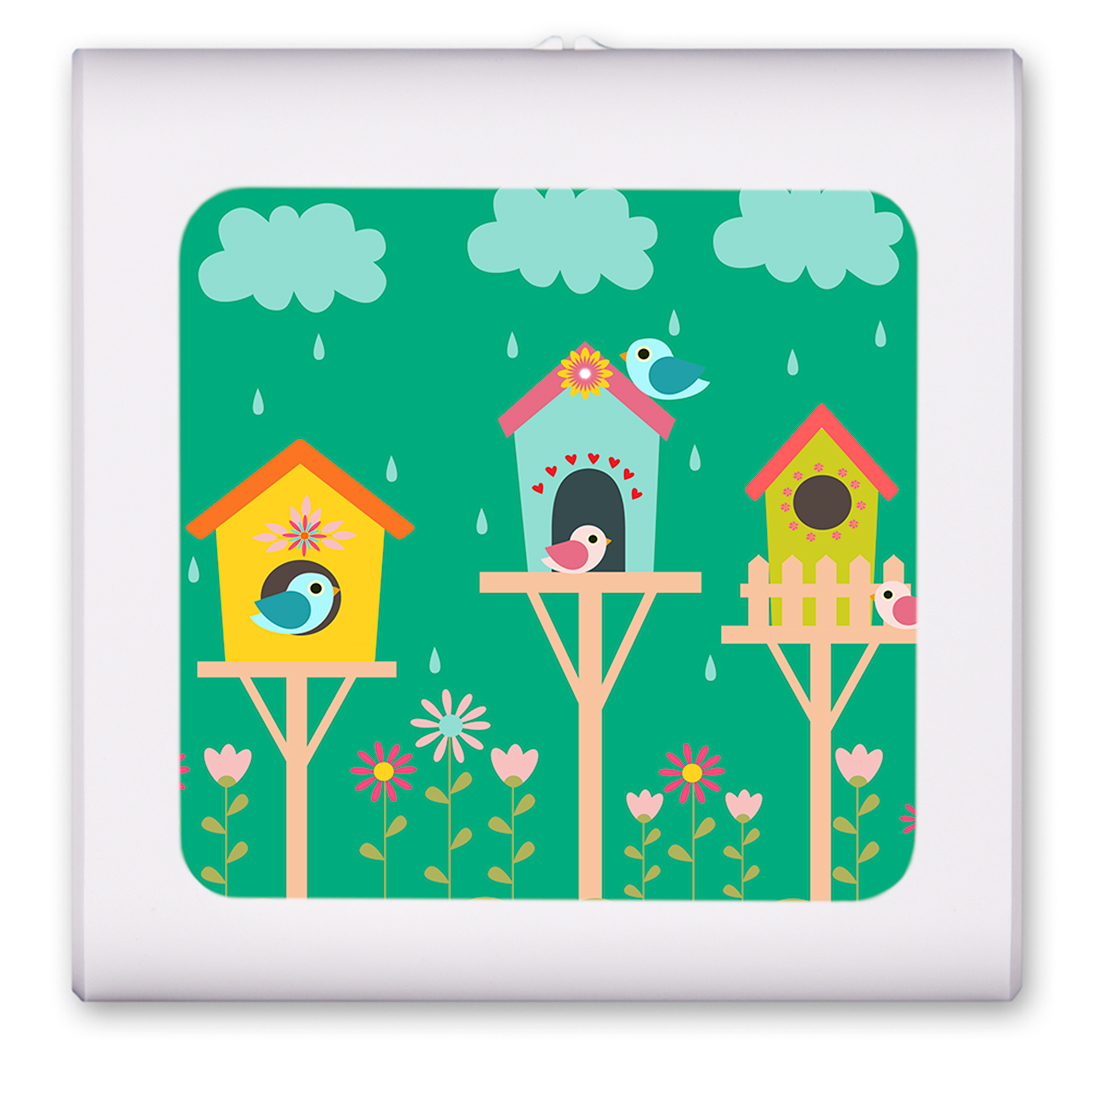 Bird Houses in The Rain - #2554